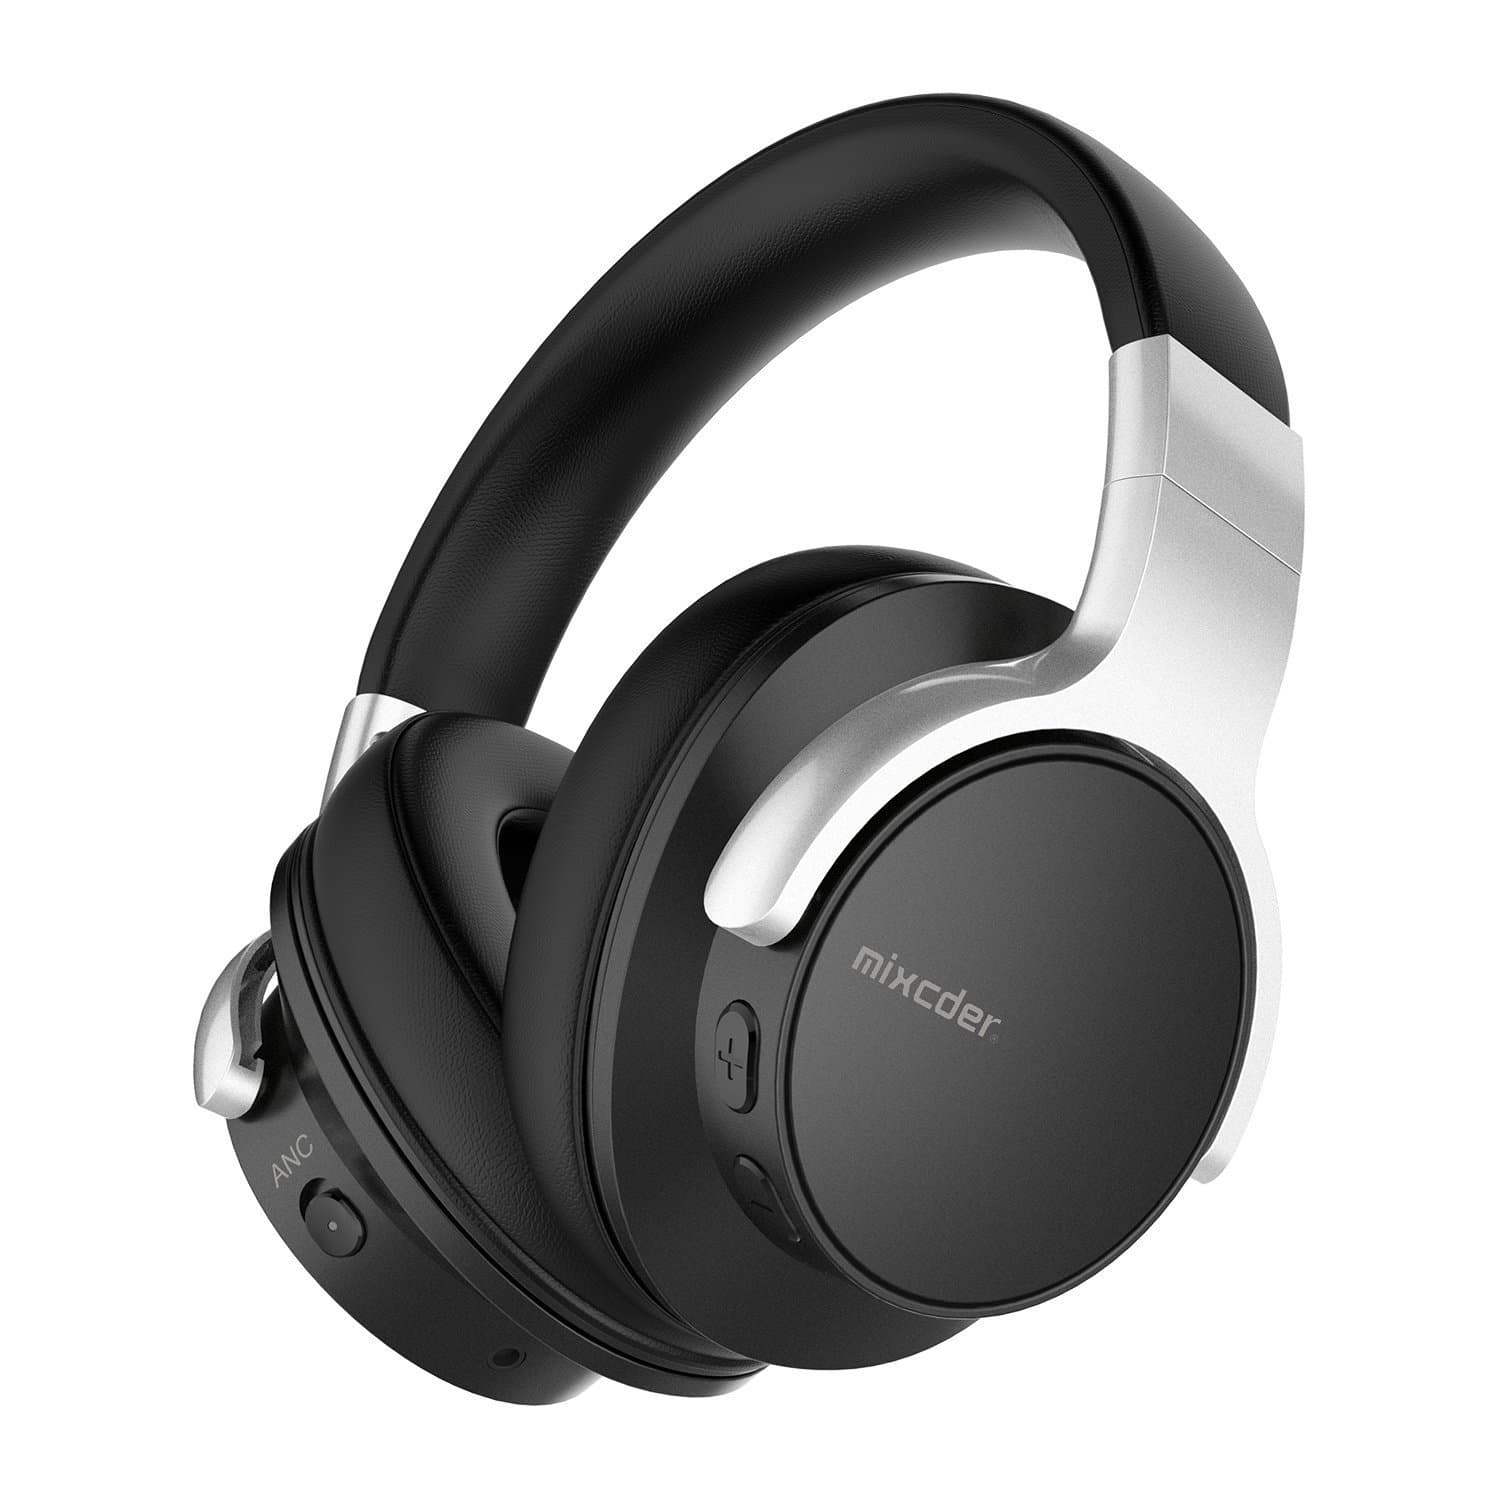 Mixcder E7 headphone amazon